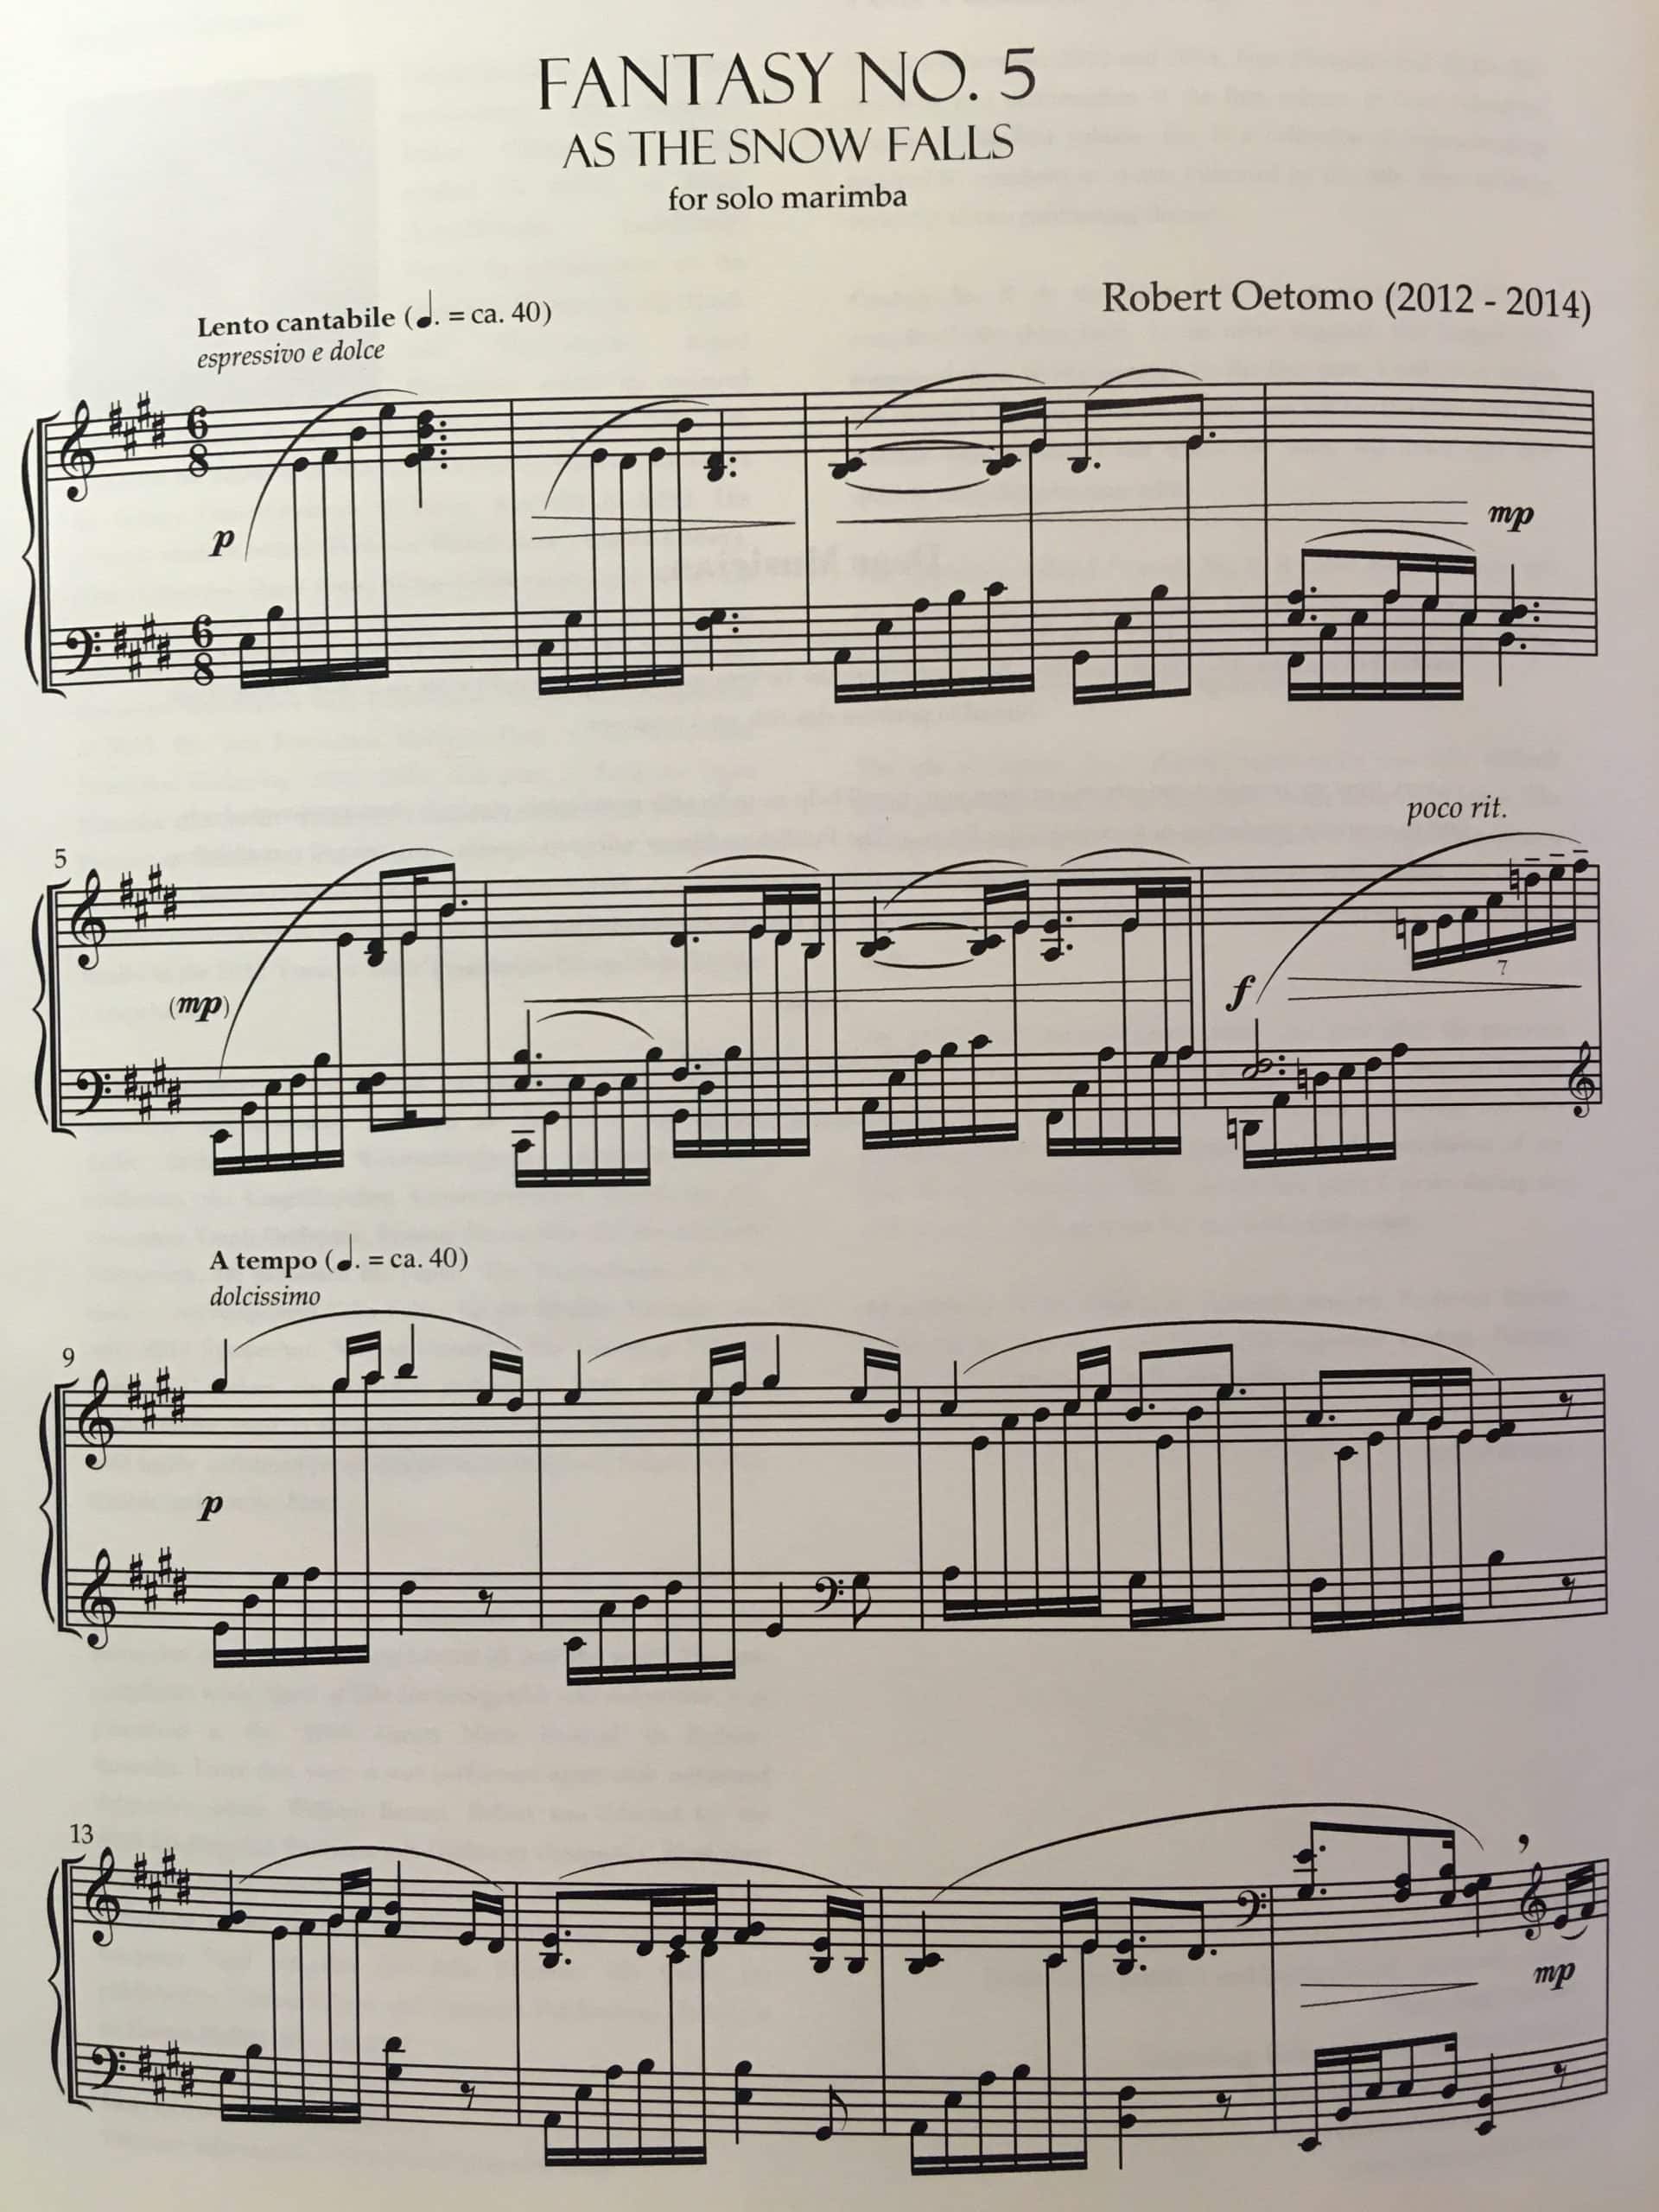 Four Fantasies for solo Marimba vol. 2 by Robert Oetomo